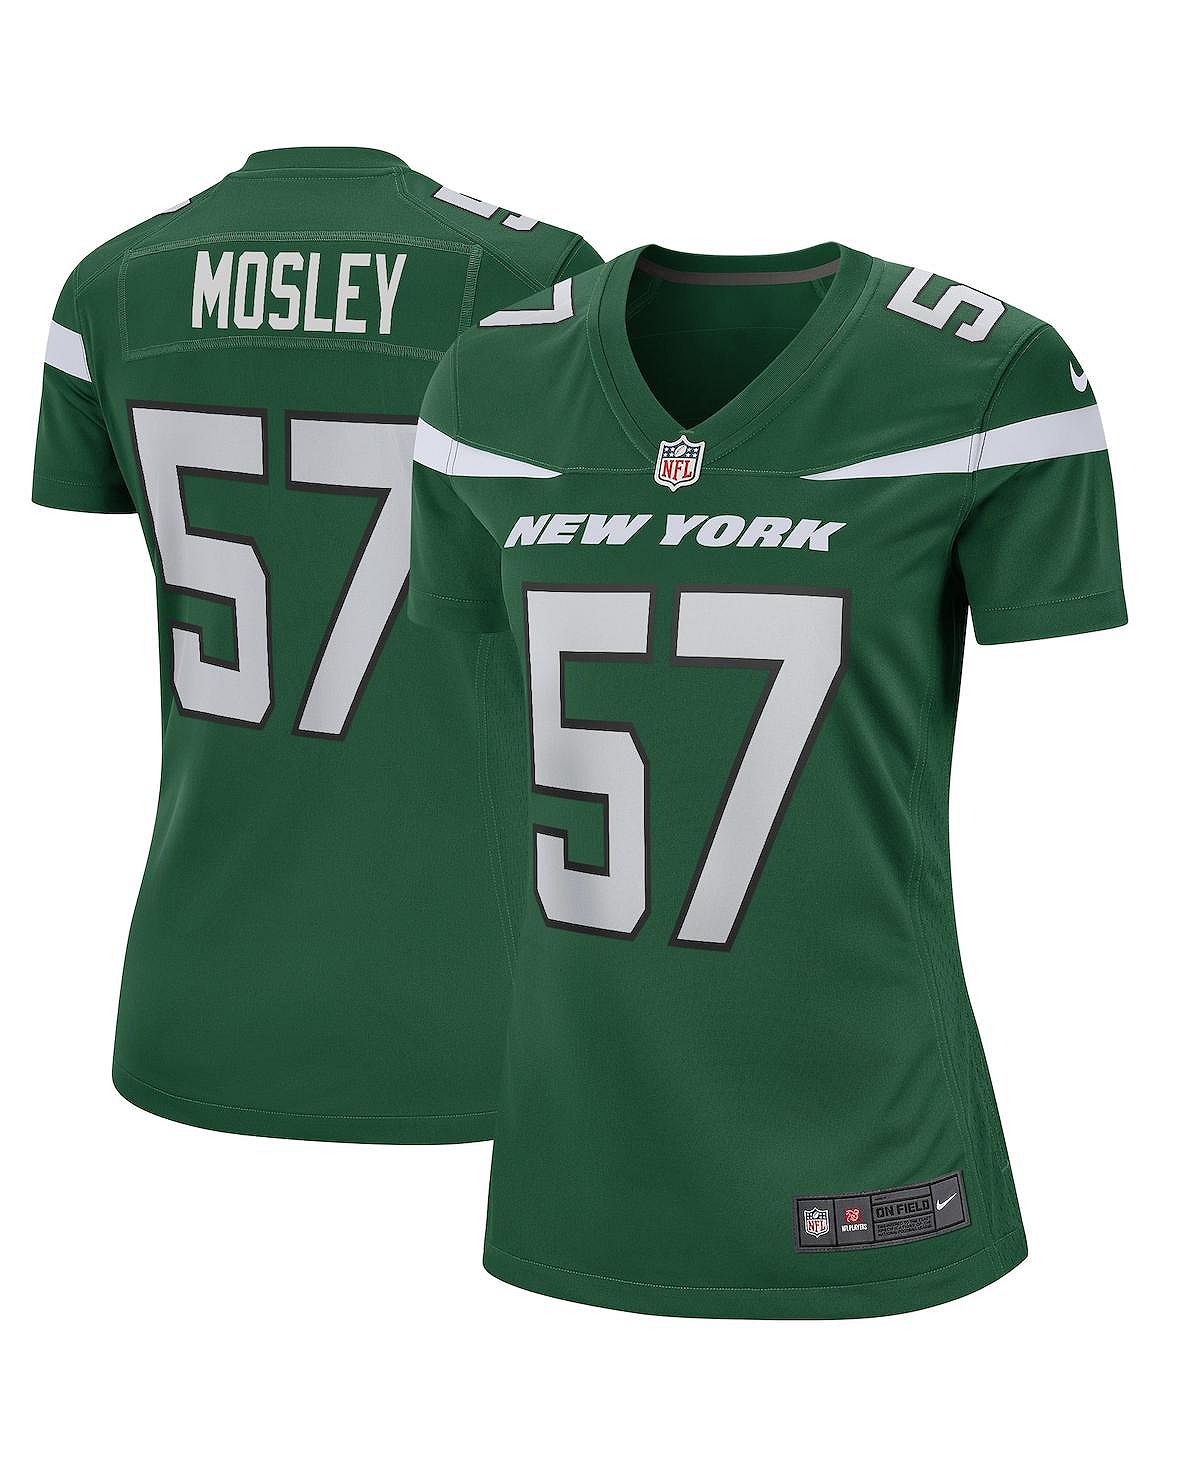 Женское джерси cj mosley gotham green new york jets game player Nike, зеленый